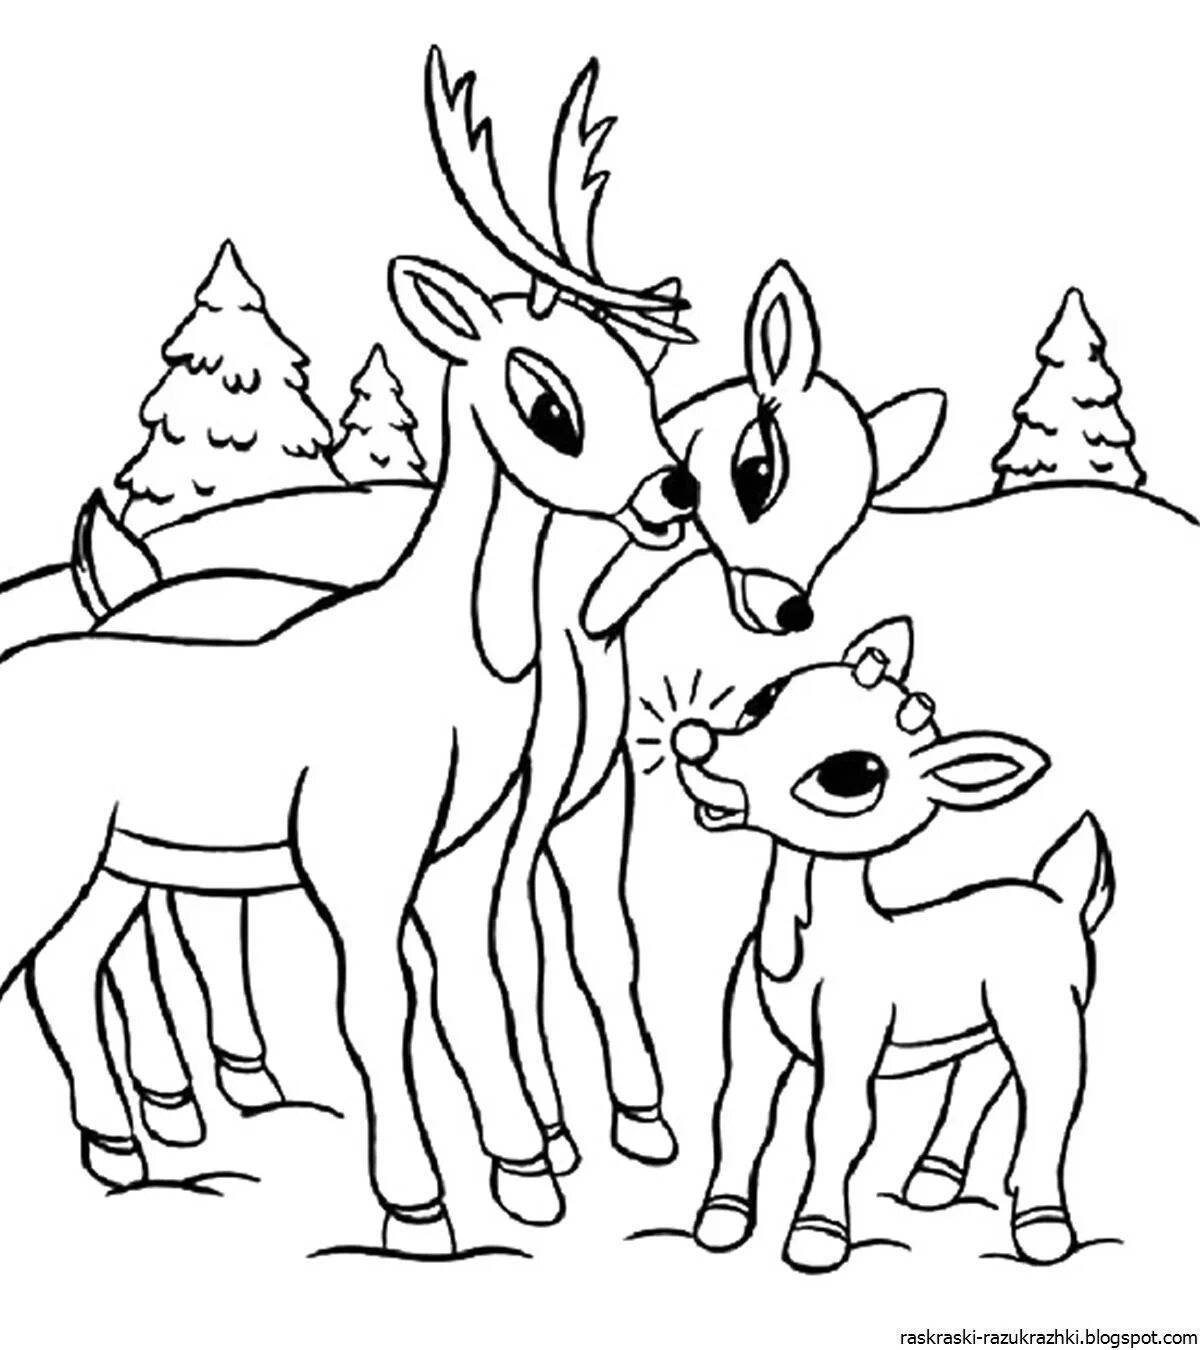 Colouring funny deer for kids